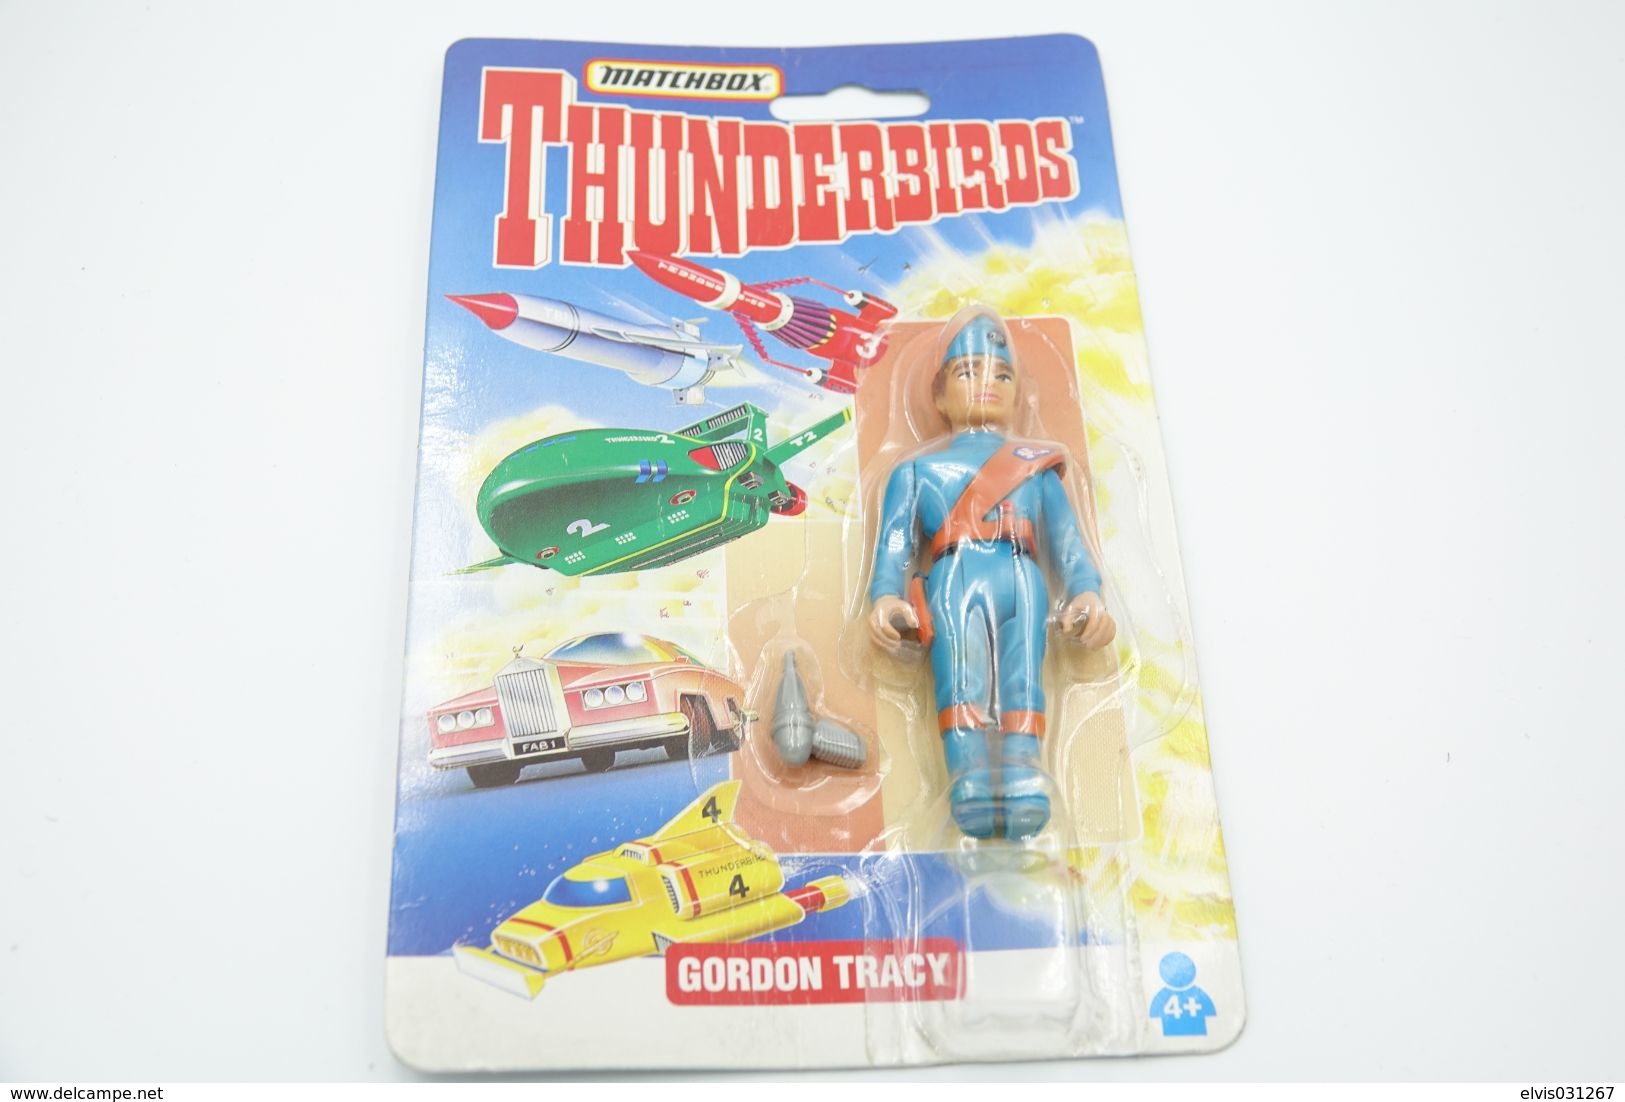 Vintage ACTION FIGURE THE THUNDERBIRDS : GORDON TRACY  - MOC MINT ON CARD - Original MATCHBOX 1992-3 - LESNEY - GI JOE - Action Man